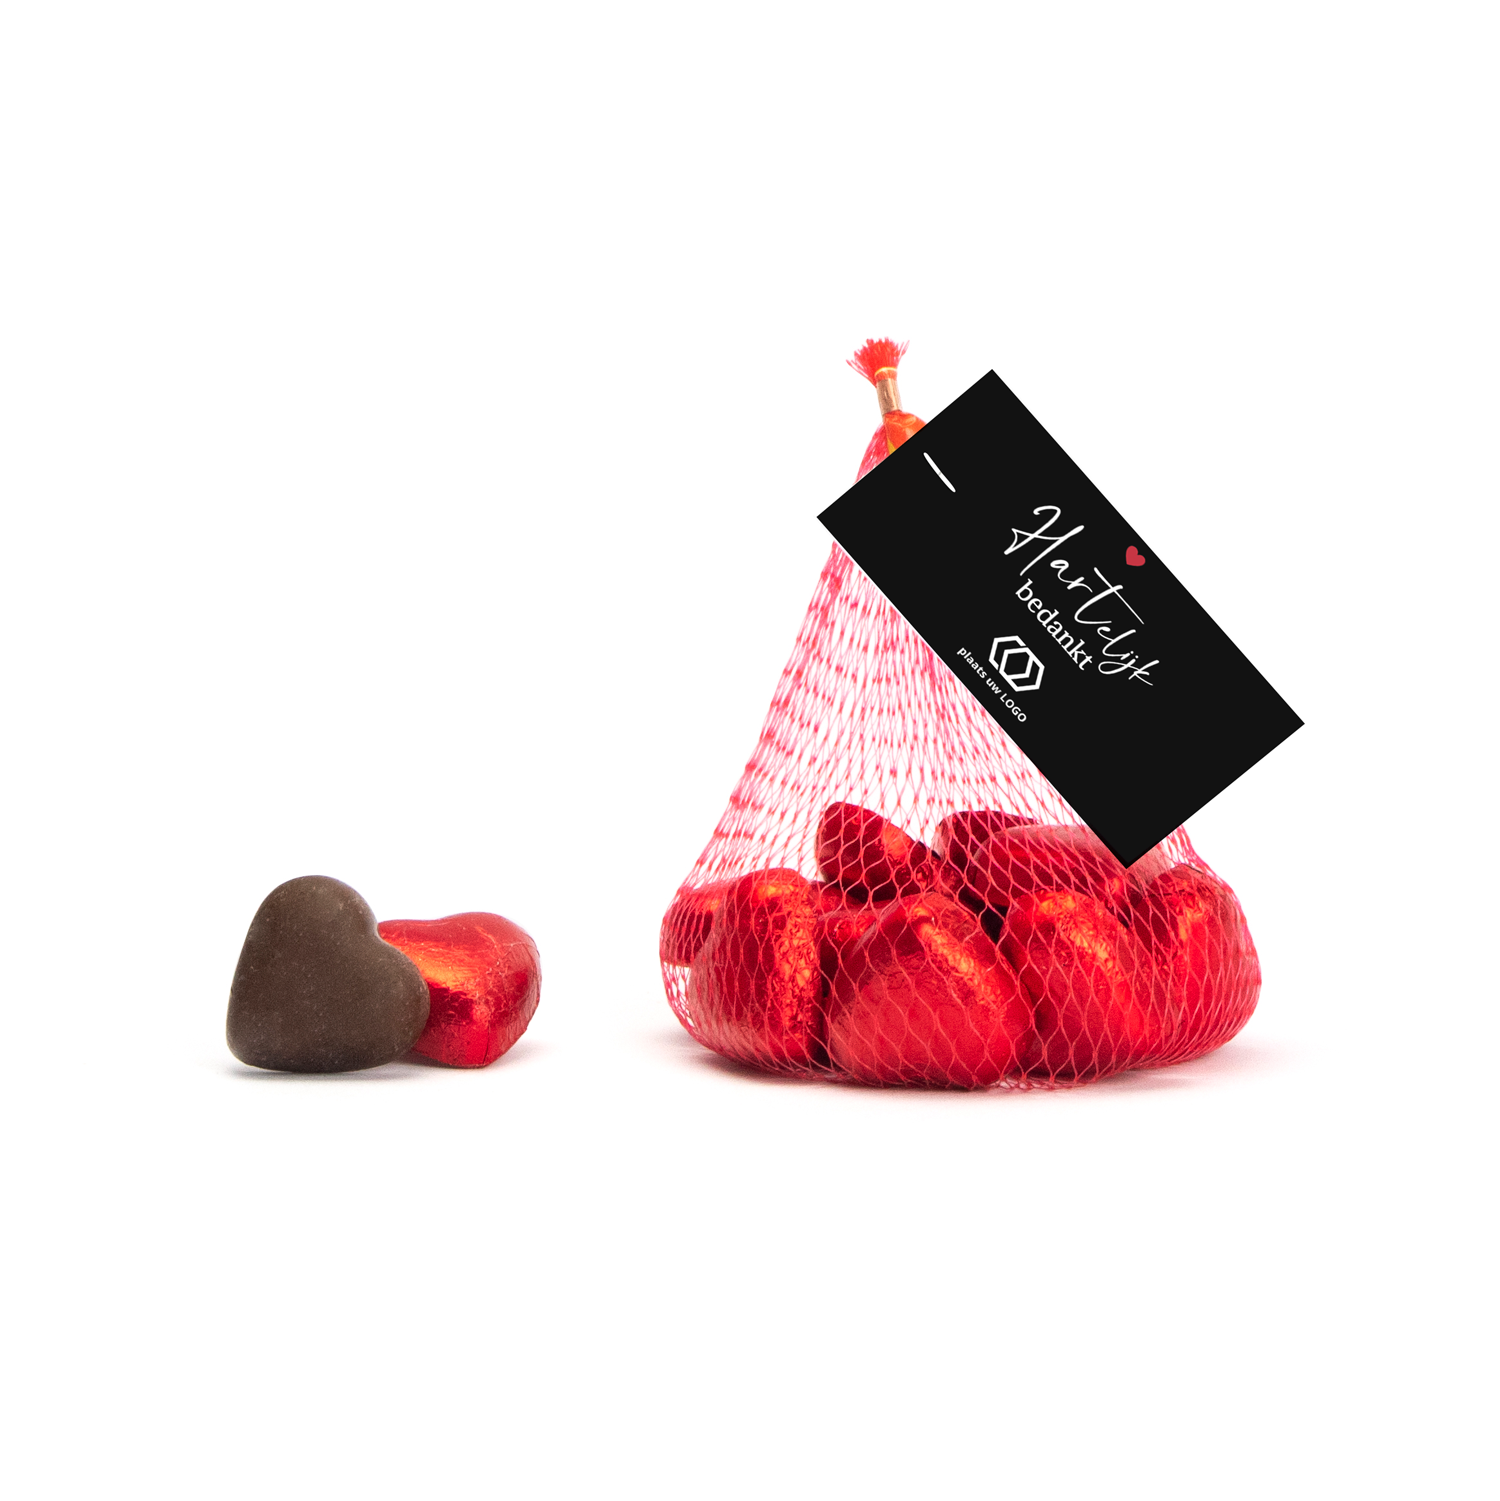 Chocolade hartjes met kaartje - Vrijwilliger - Bedankjes.nl